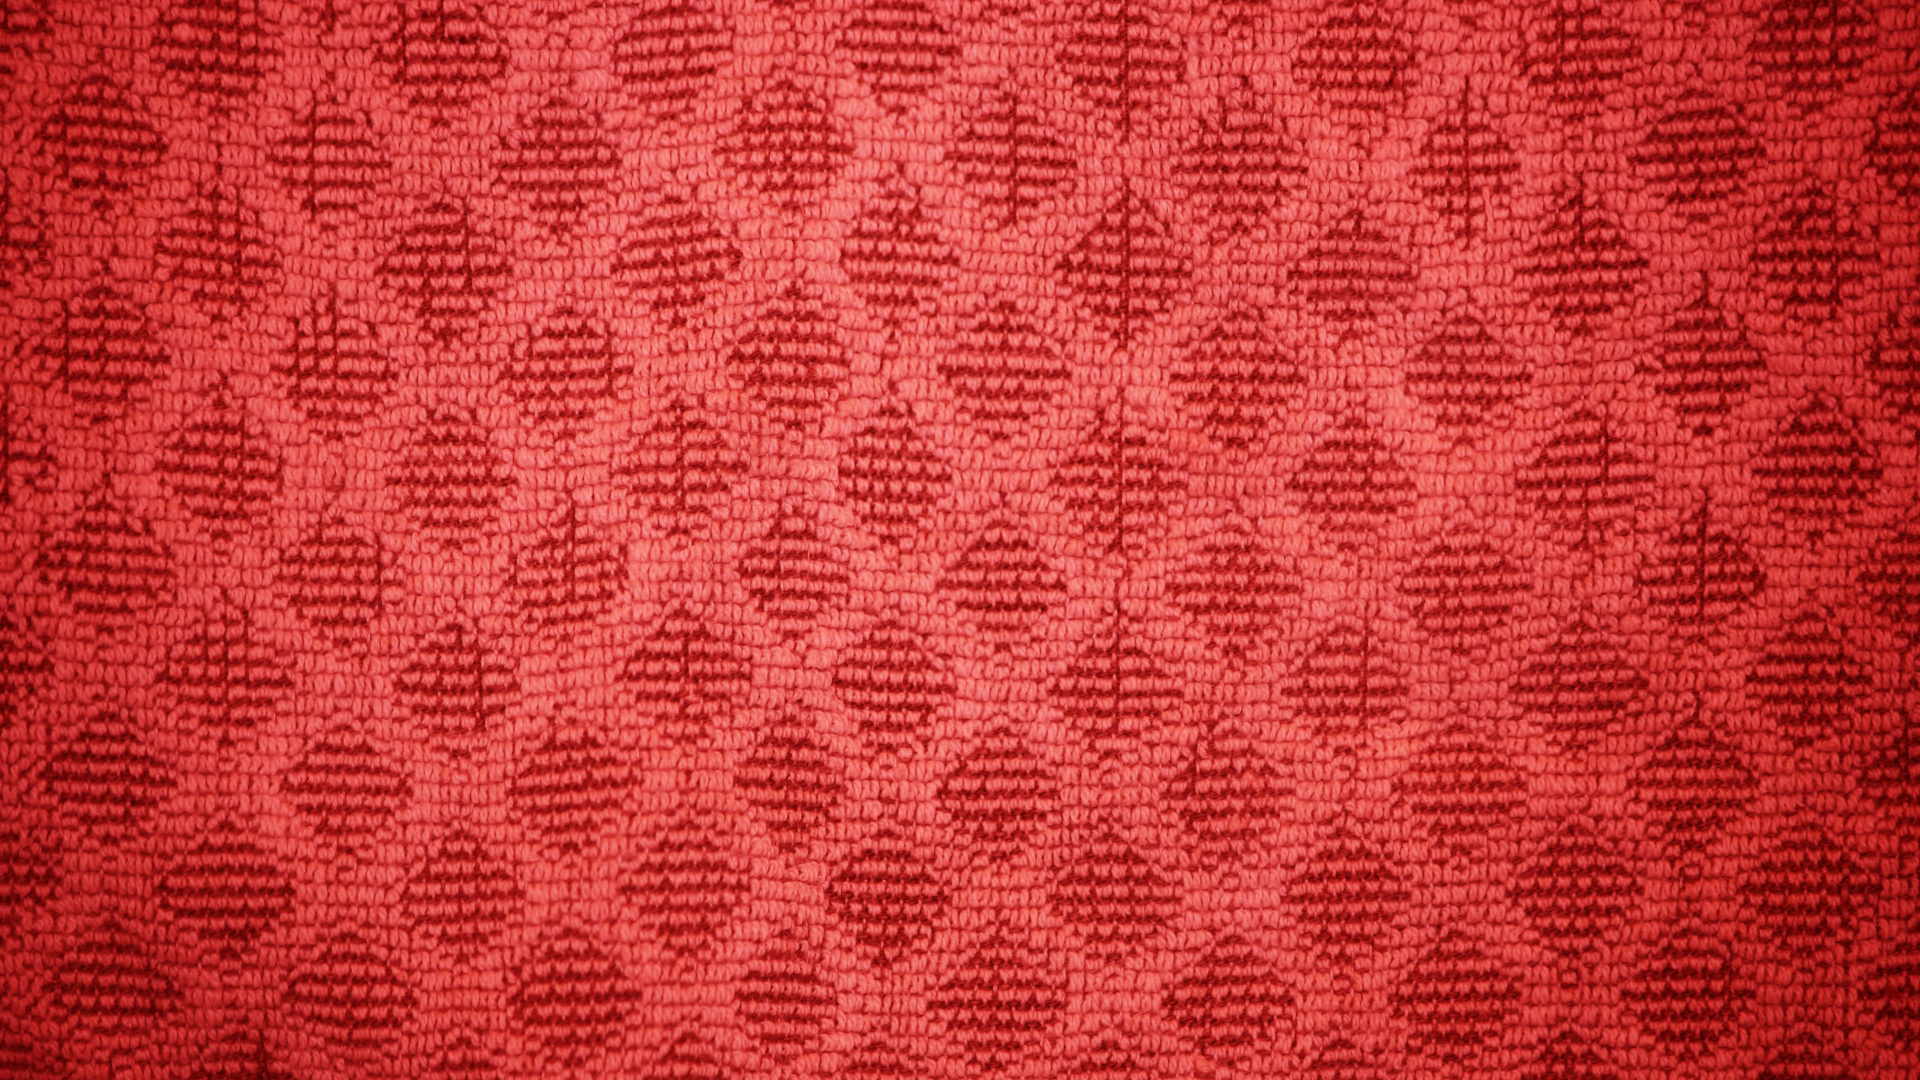 Textil Floral Rojo y Blanco. Wallpaper in 1920x1080 Resolution